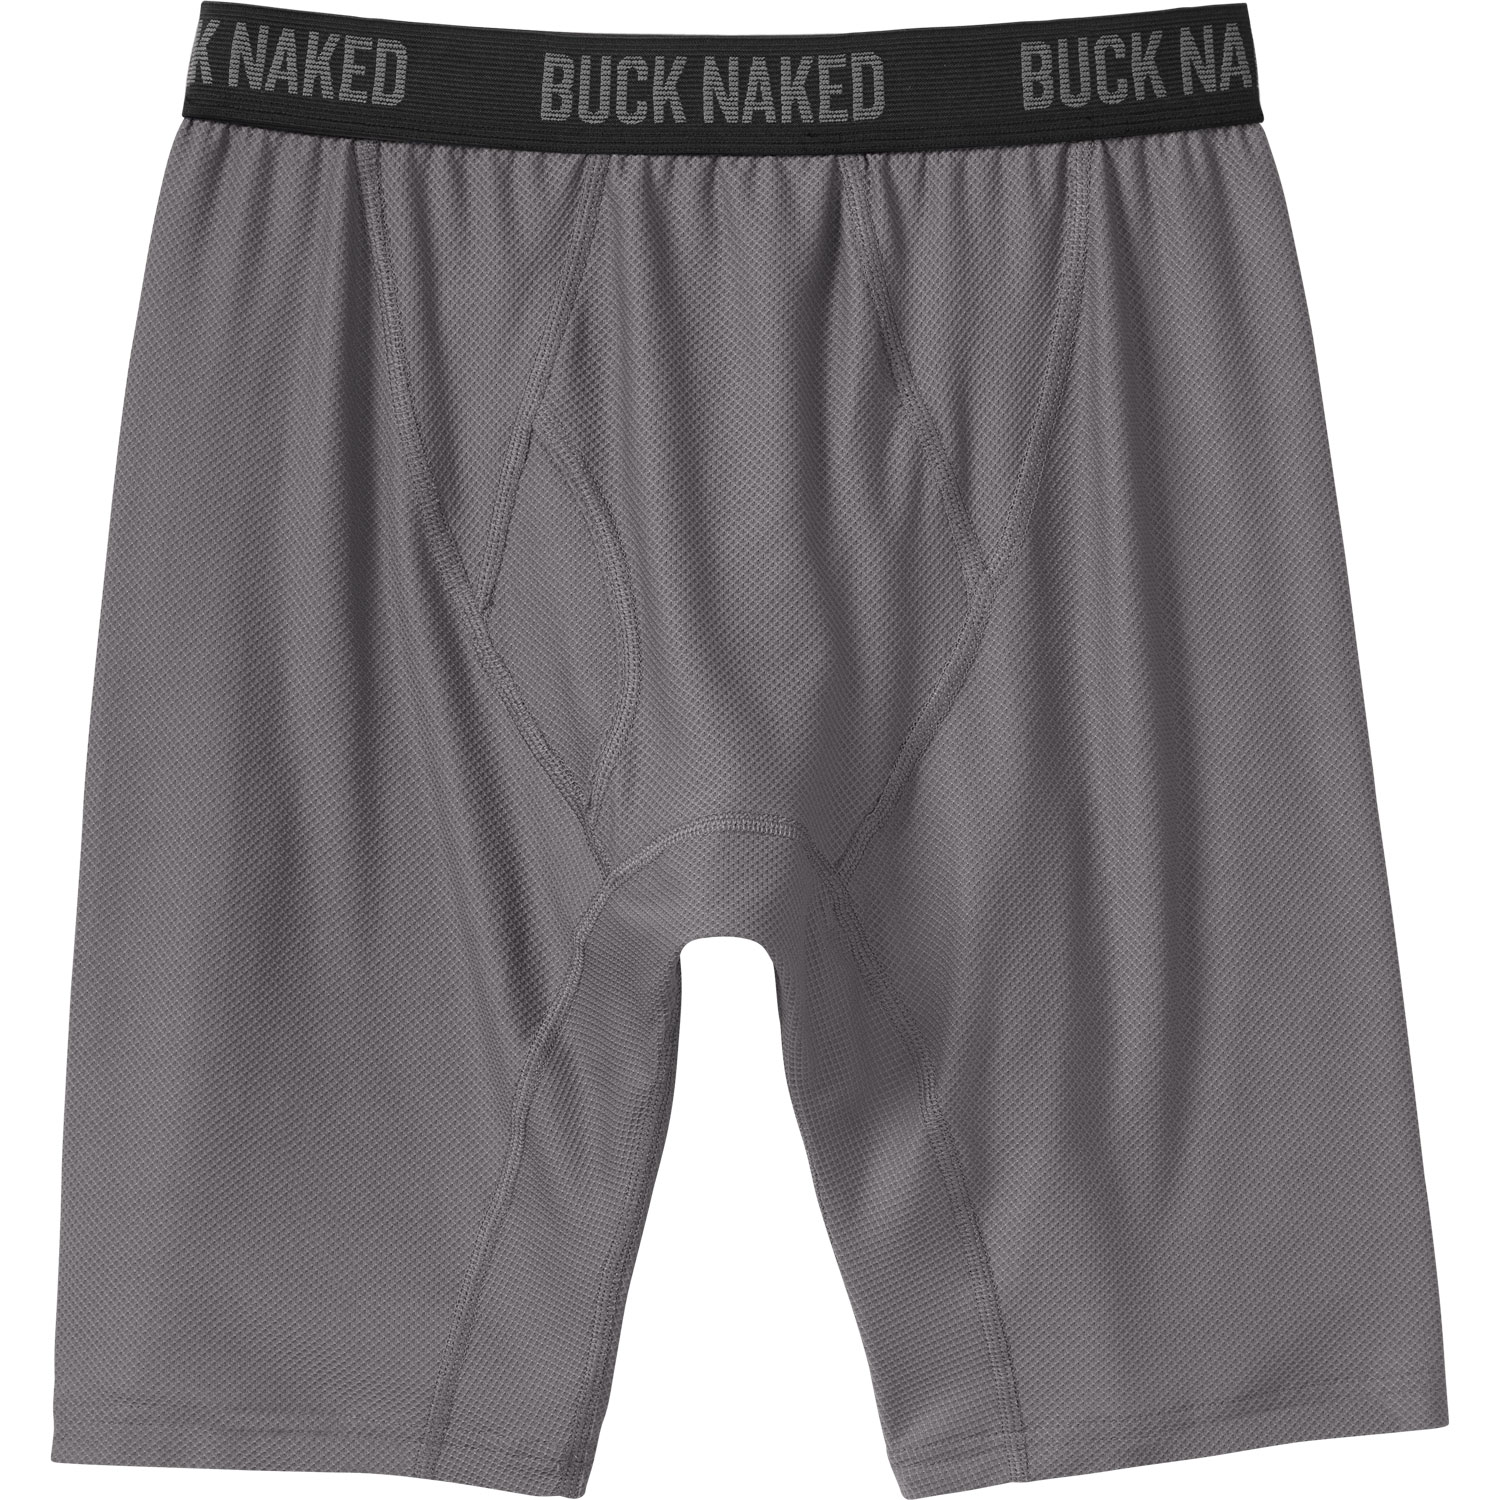 REVIEW Men's Duluth Buck Naked Underwear Boxer Briefs I LOVE THEM